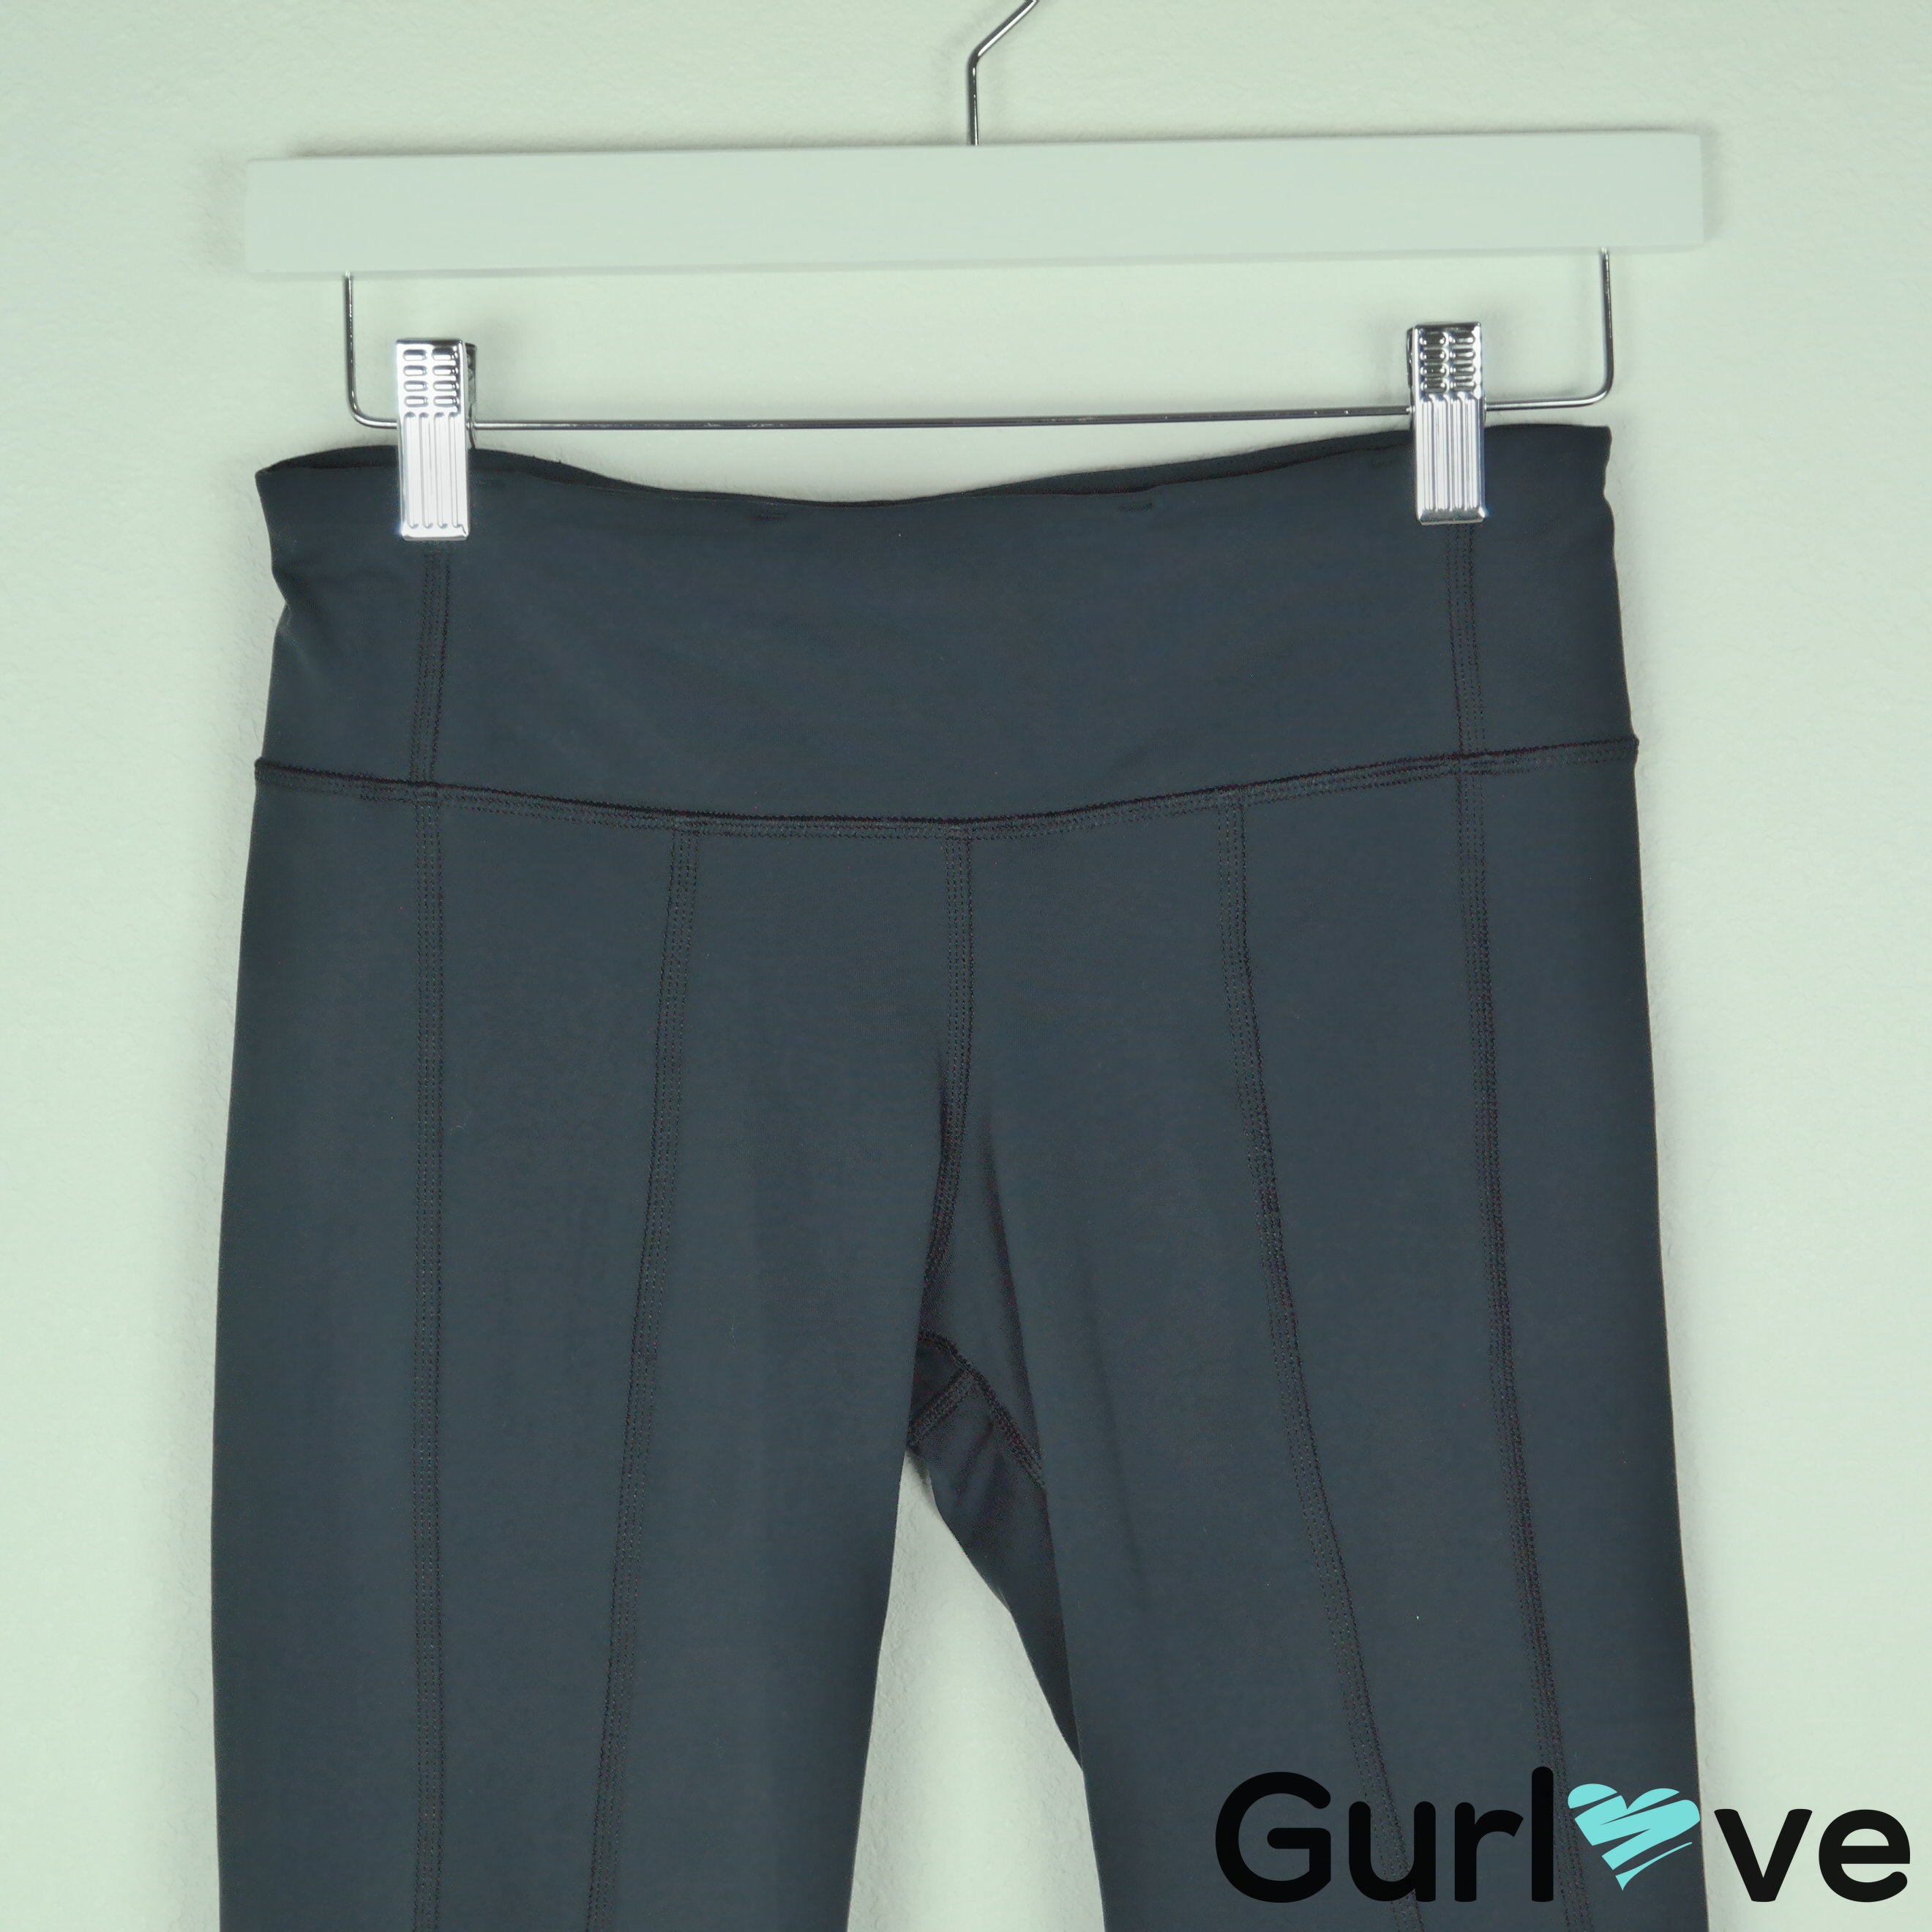 lululemon pants with zipper in back